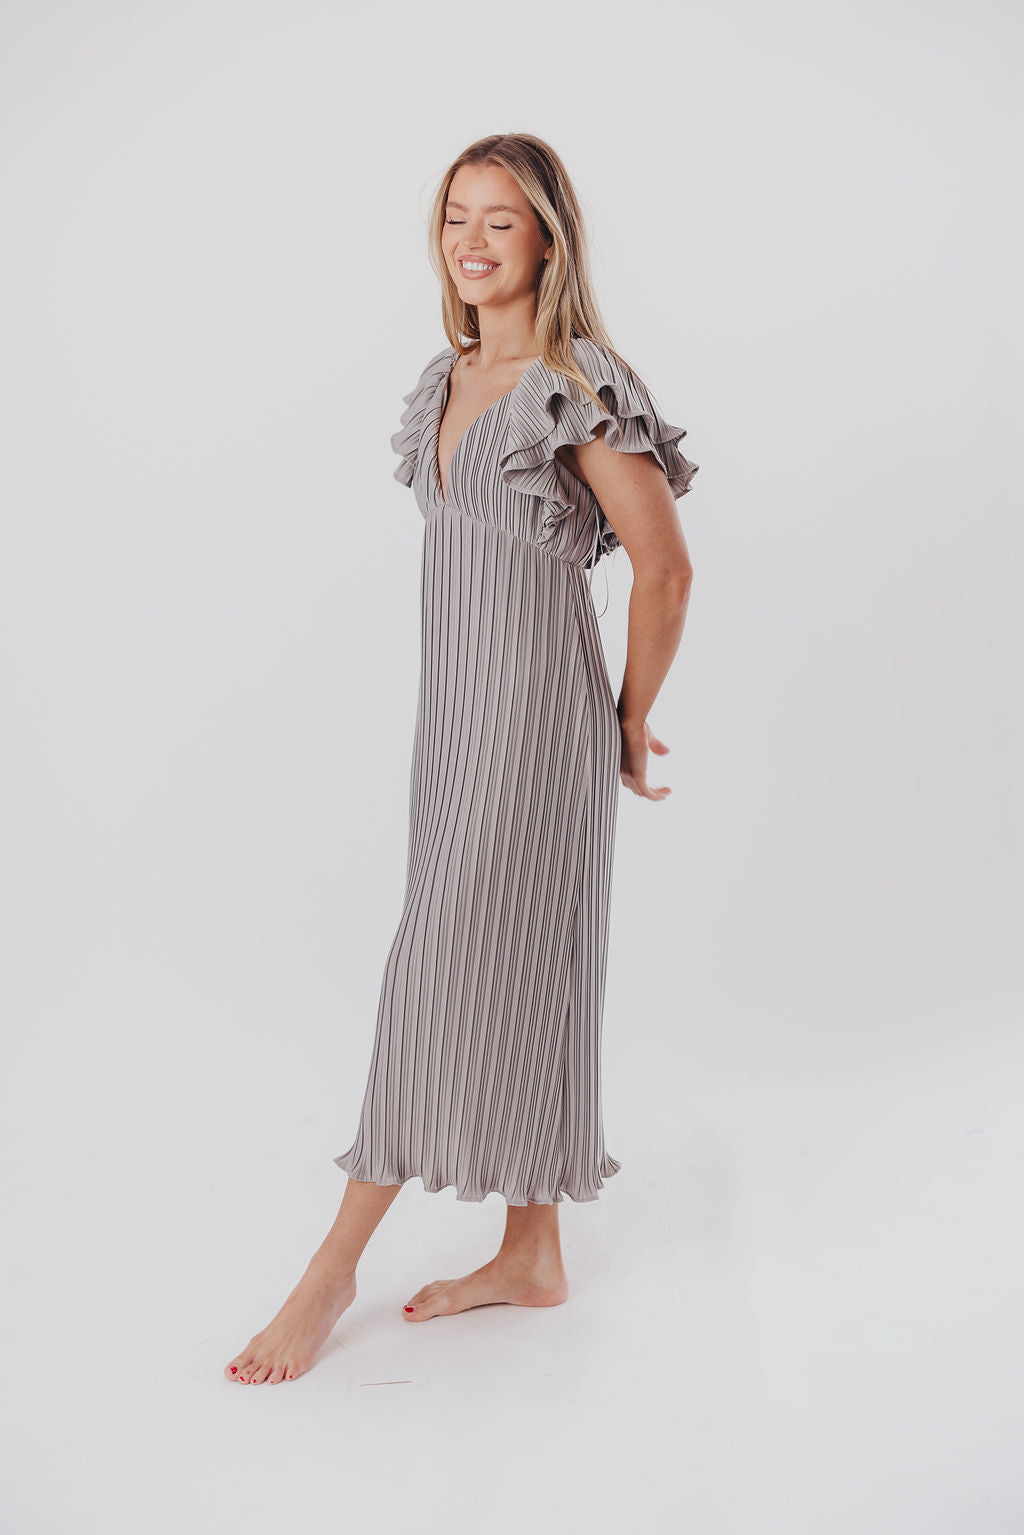 Lucky Charm Midi Dress in Grey - Bump Friendly & Inclusive Sizing (S-3XL)